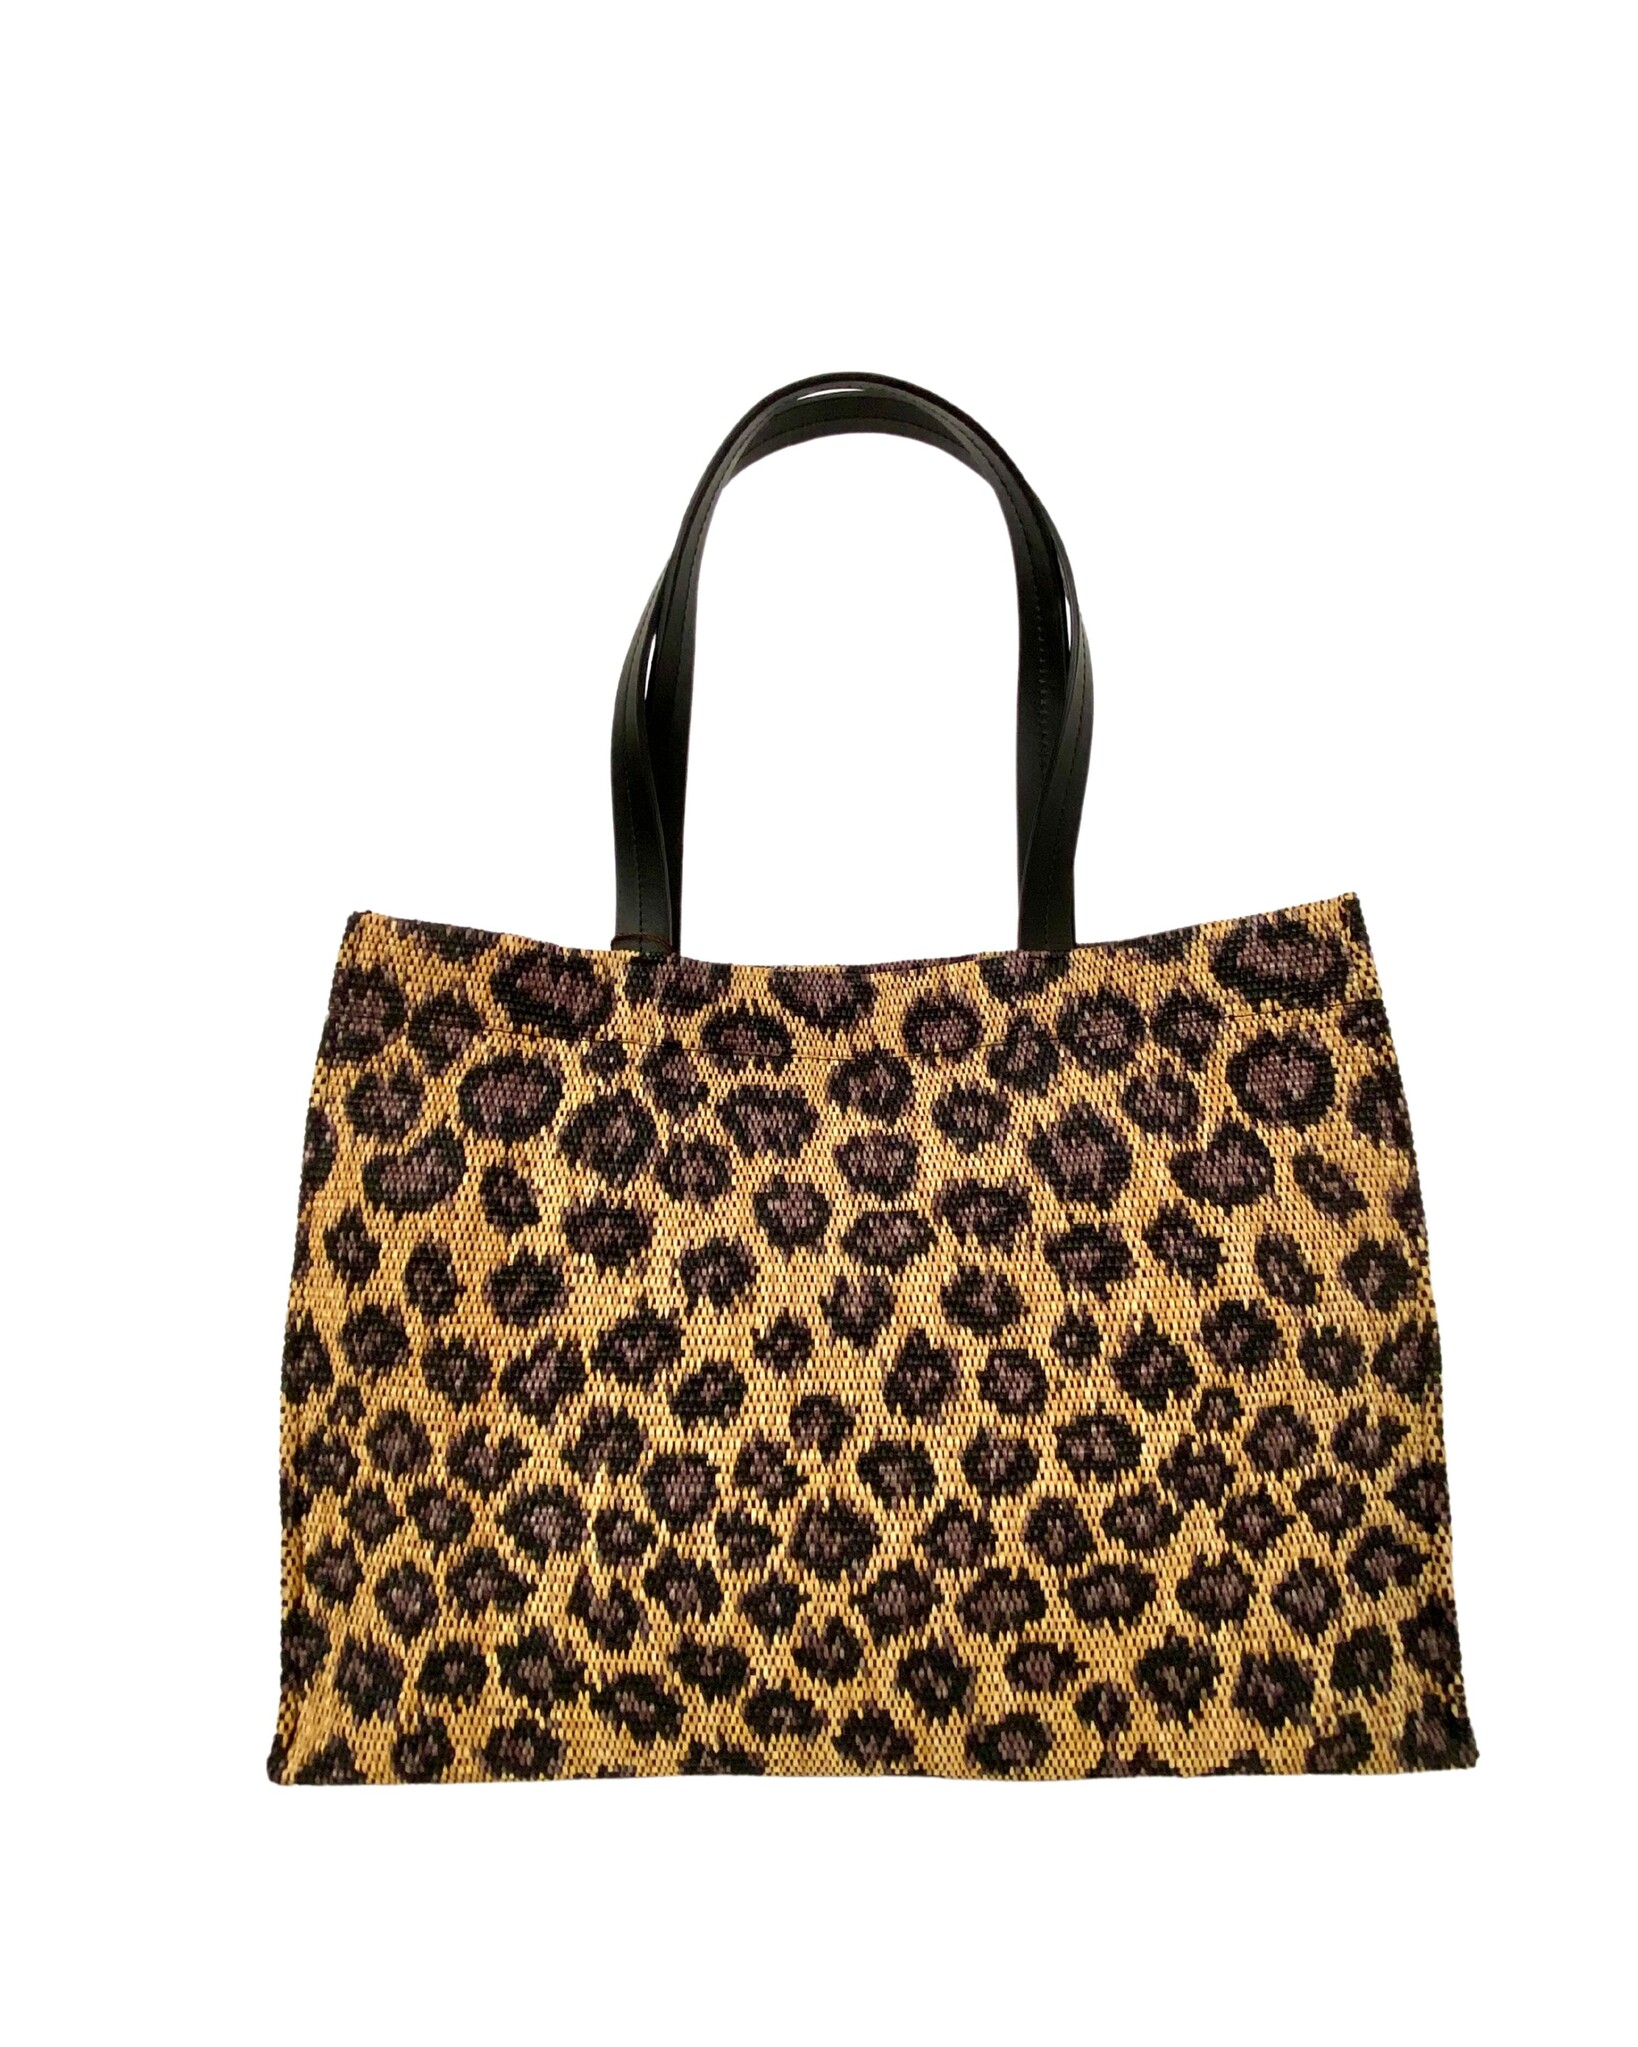 GANNI + NET SUSTAIN leopard-print recycled-shell shoulder bag | NET-A-PORTER